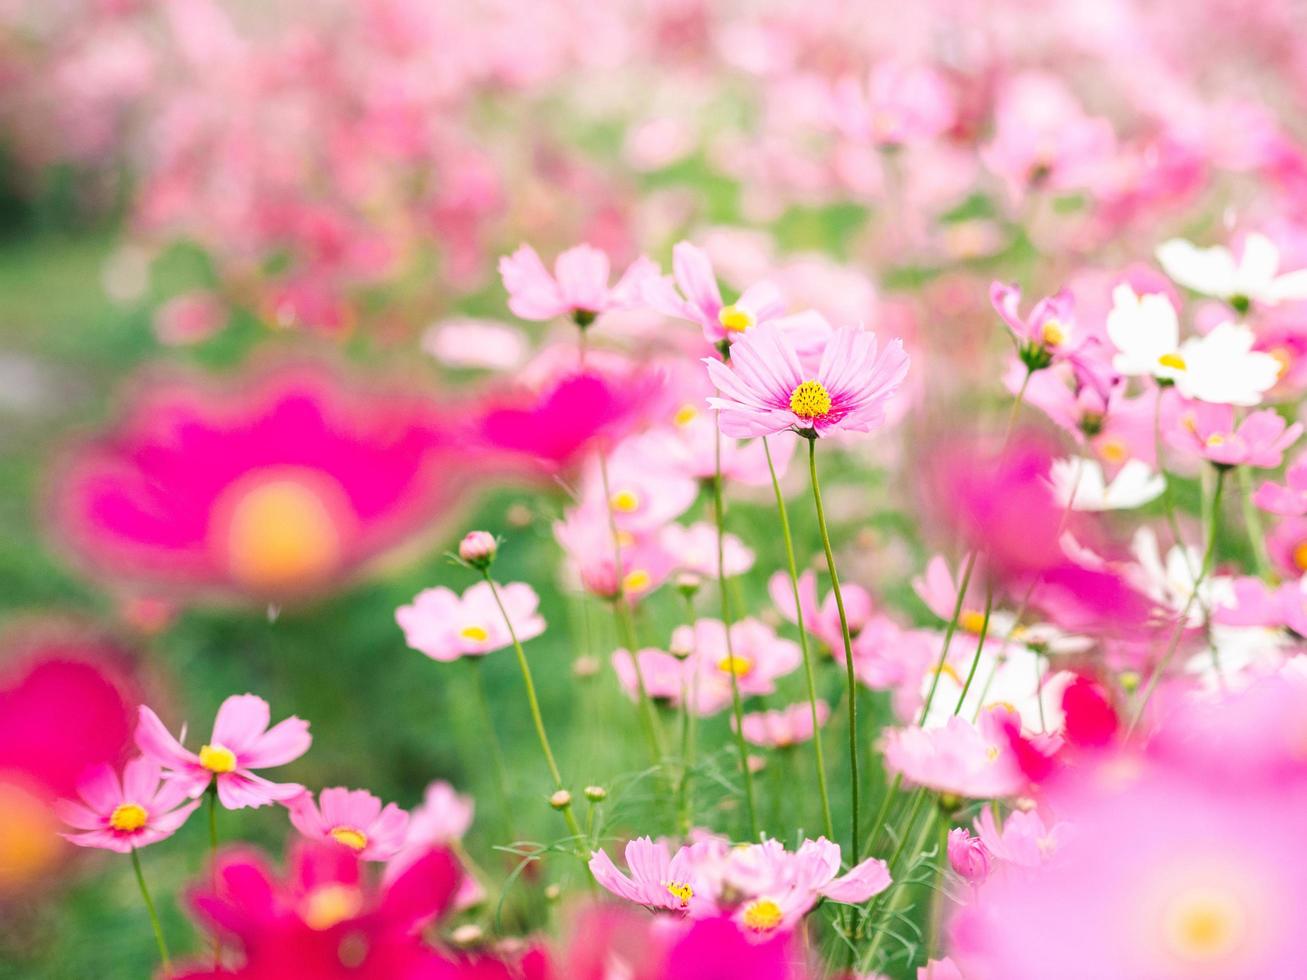 Pink cosmos flowers bloom in the garden photo